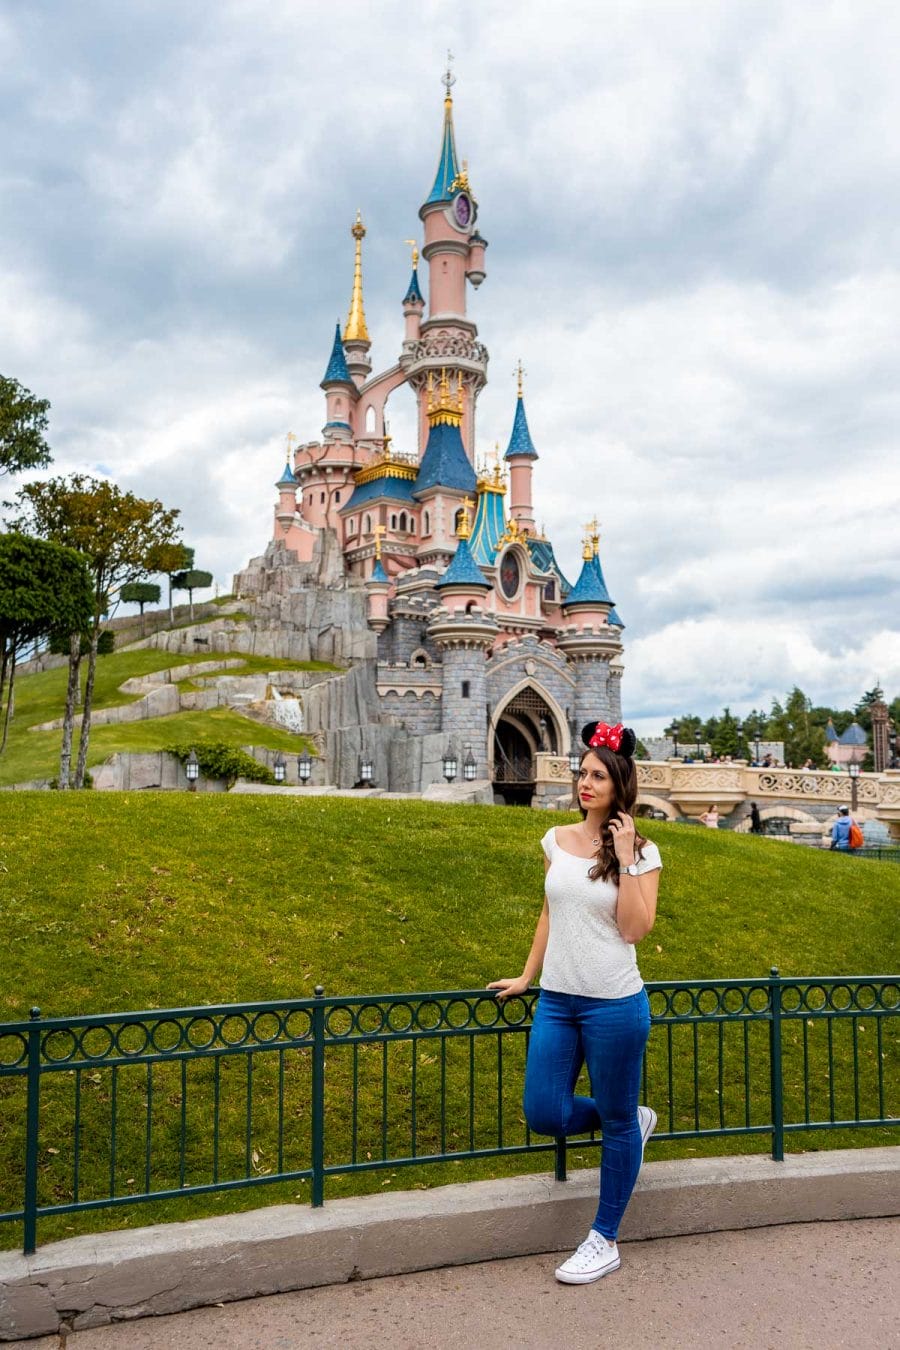 Girl standing in front of Sleeping Beauty's Castle in Disneyland Paris, which is one of the best Paris Instagram spots